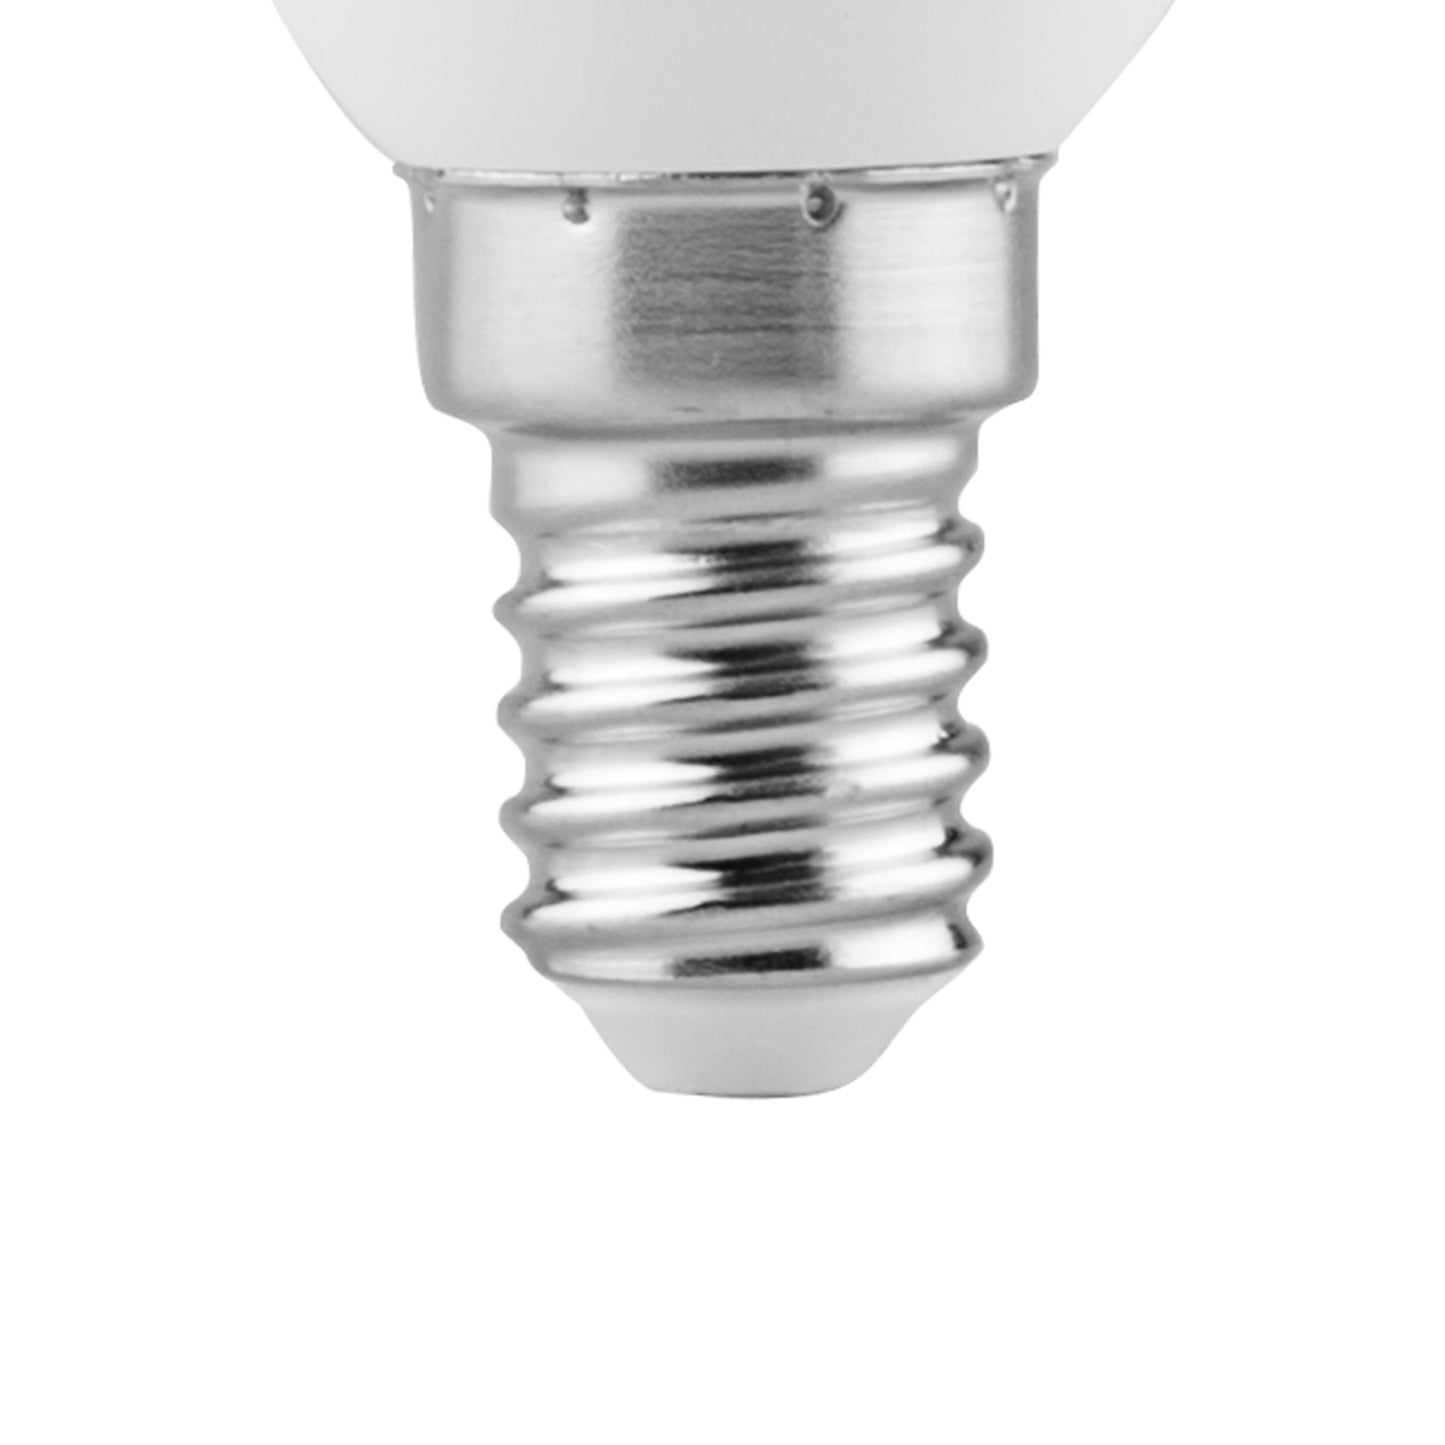 LAMPE LED LAMPE MATEL PLAQUE E14 6W 